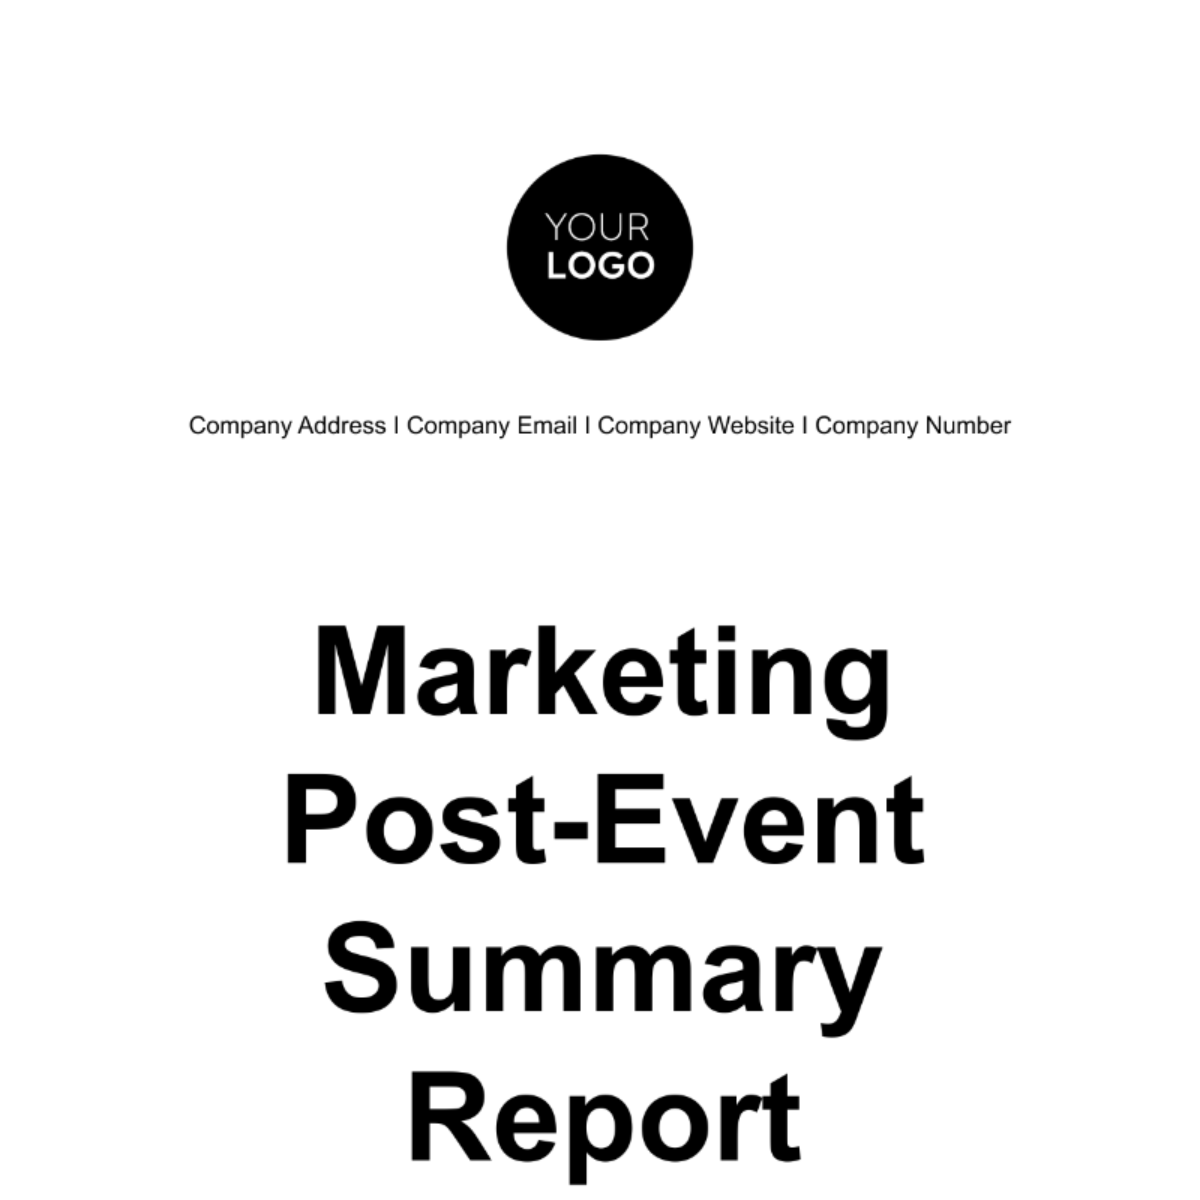 Marketing Post-Event Summary Report Template